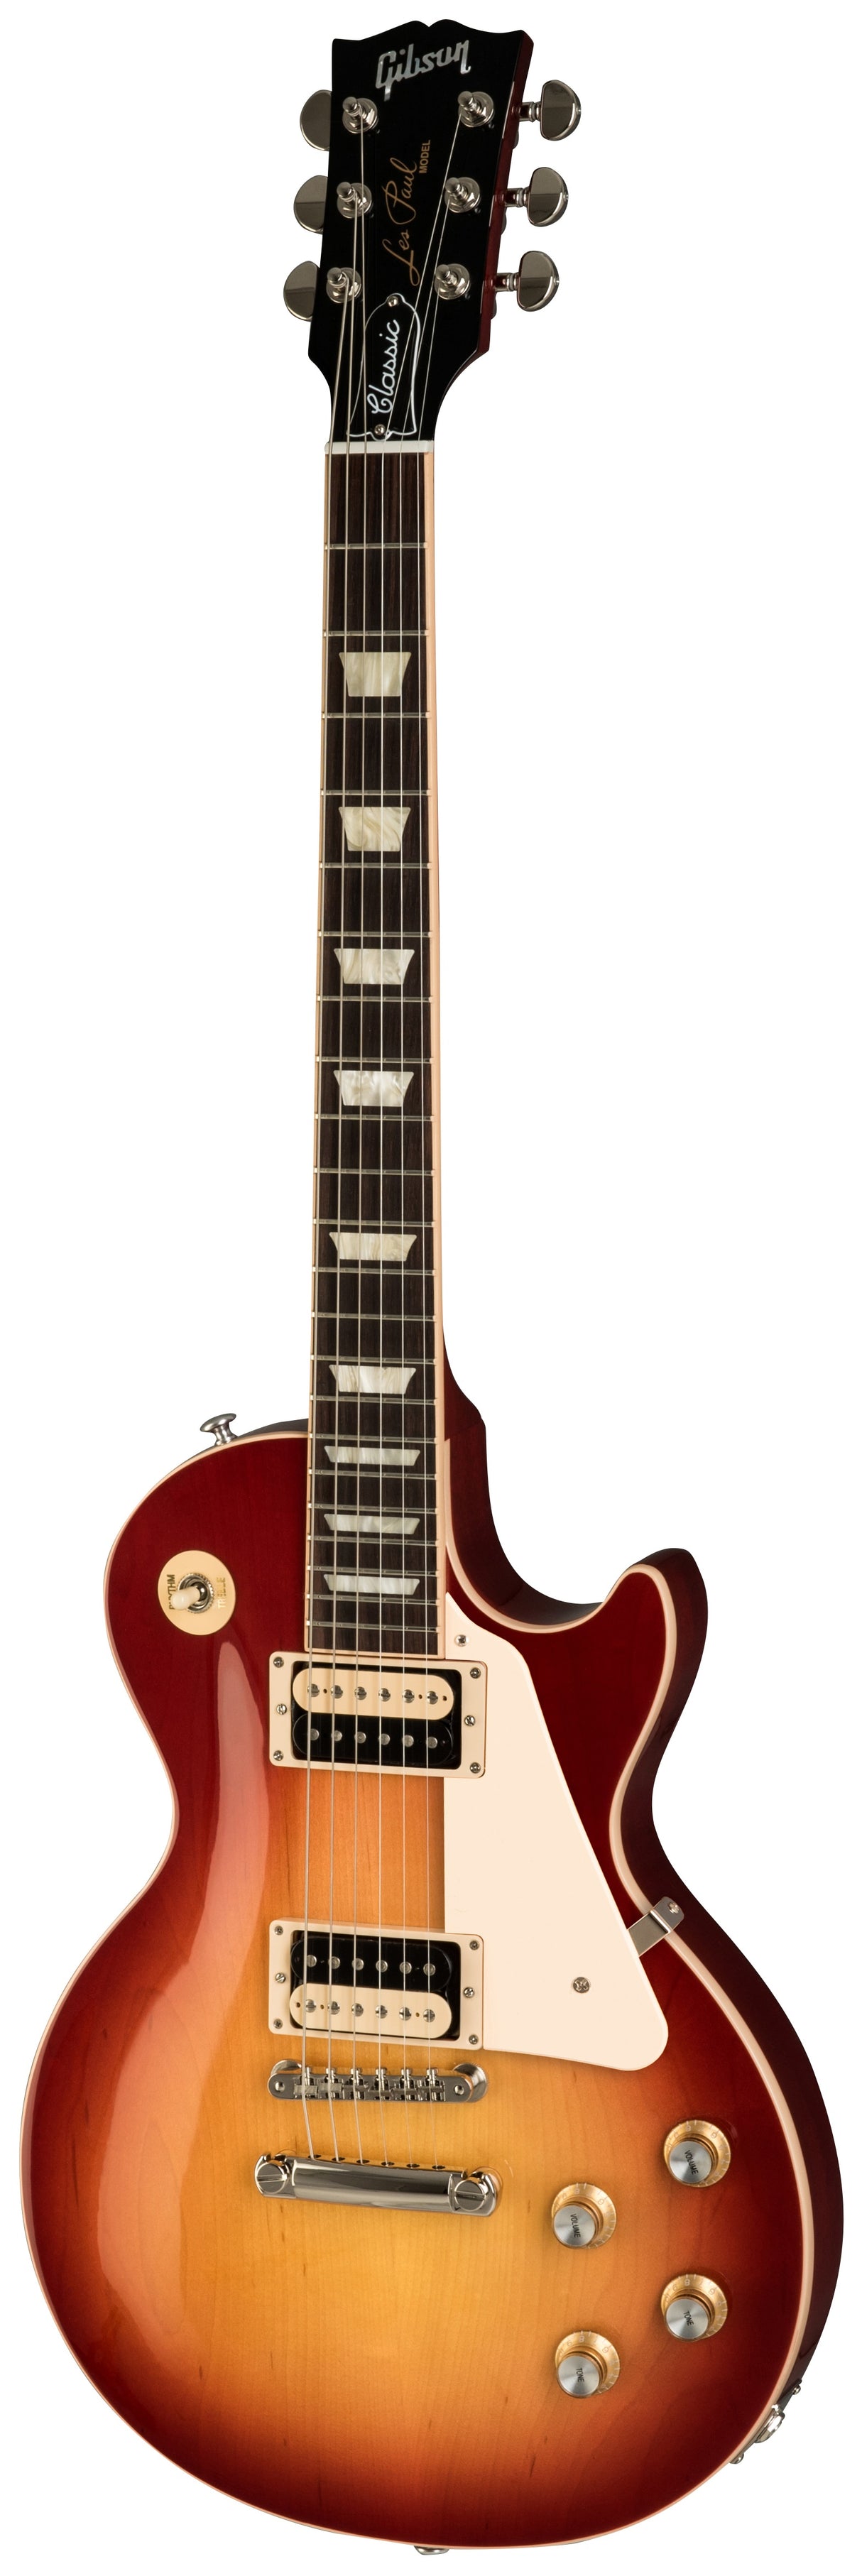 Gibson Les Paul Classic Electric Guitar, Heritage Cherry Sunburst